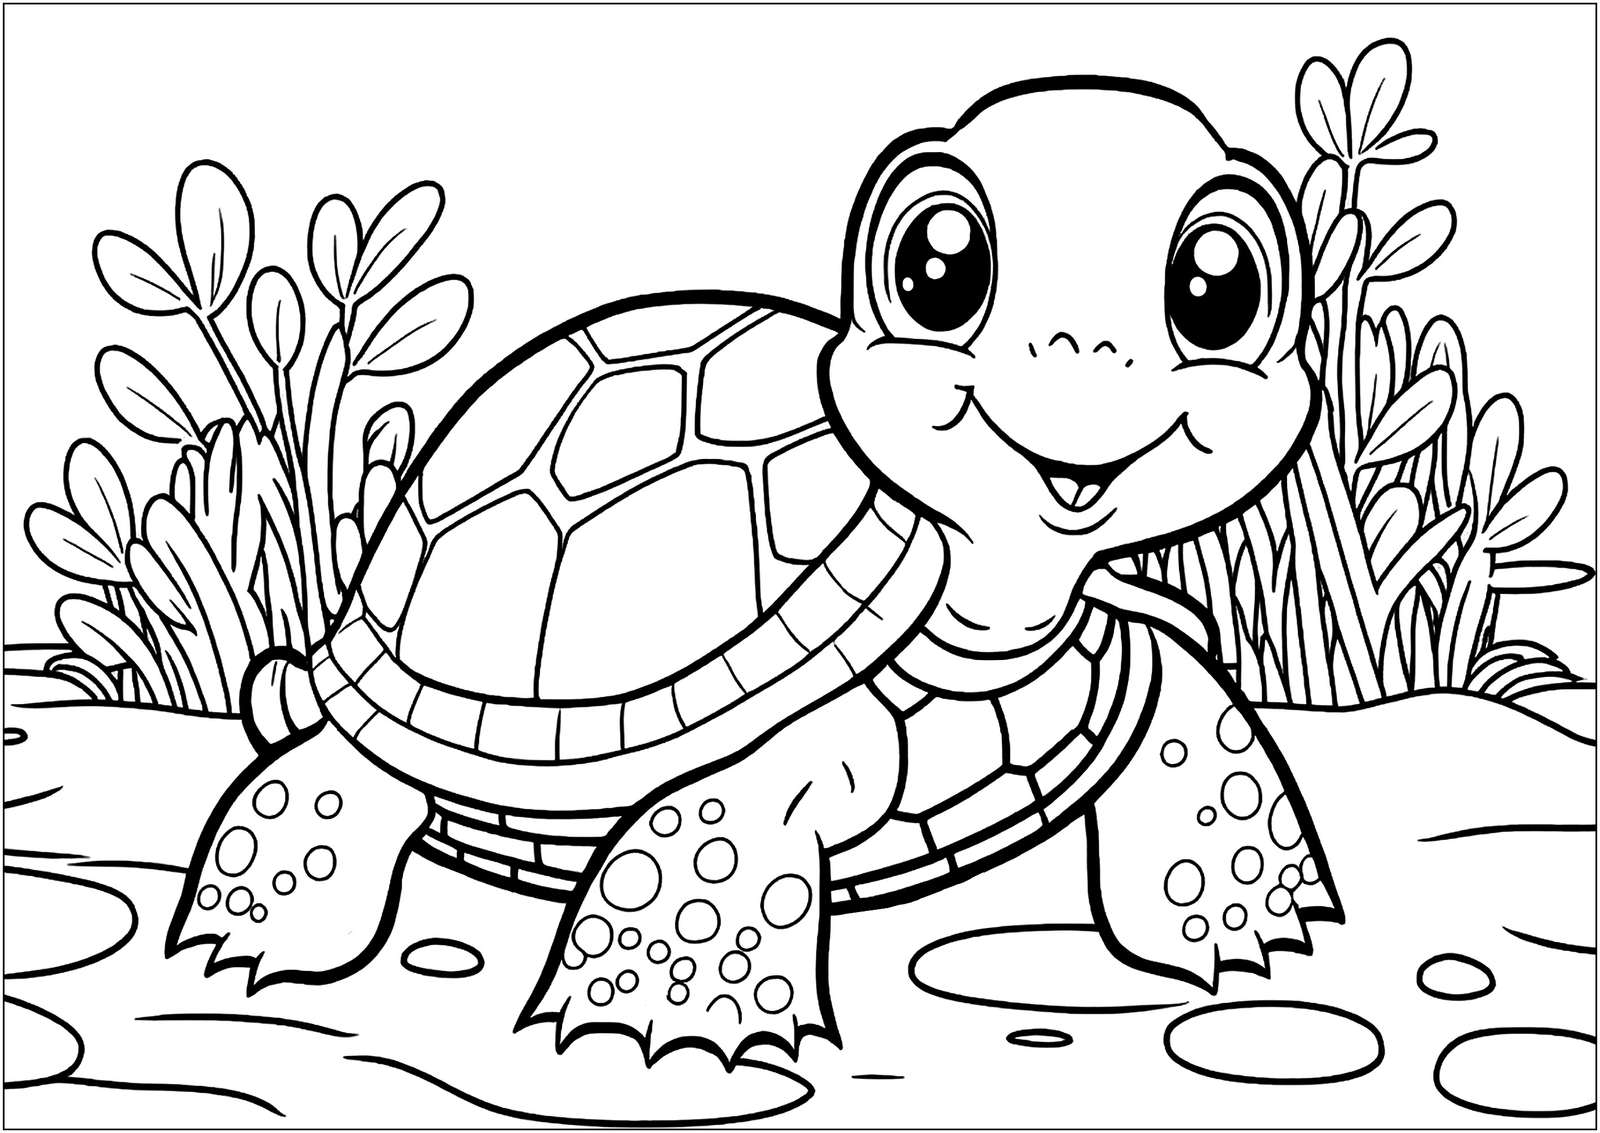 żółwie puzzle online